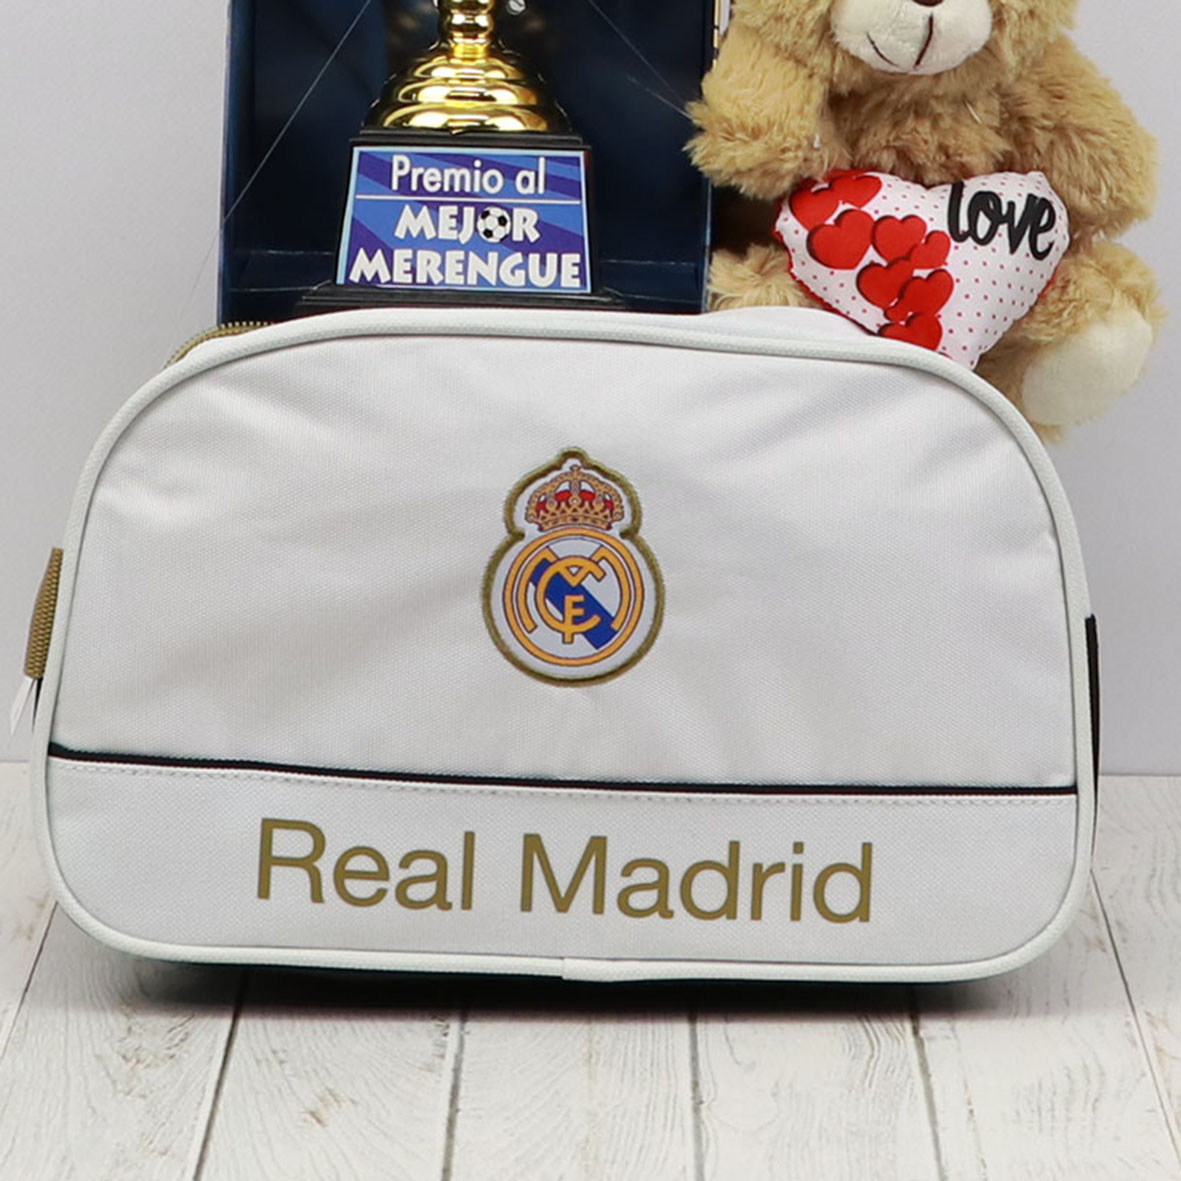 Cesta neceser Real Madrid 0039-SHAU - Tienda de ilusiones